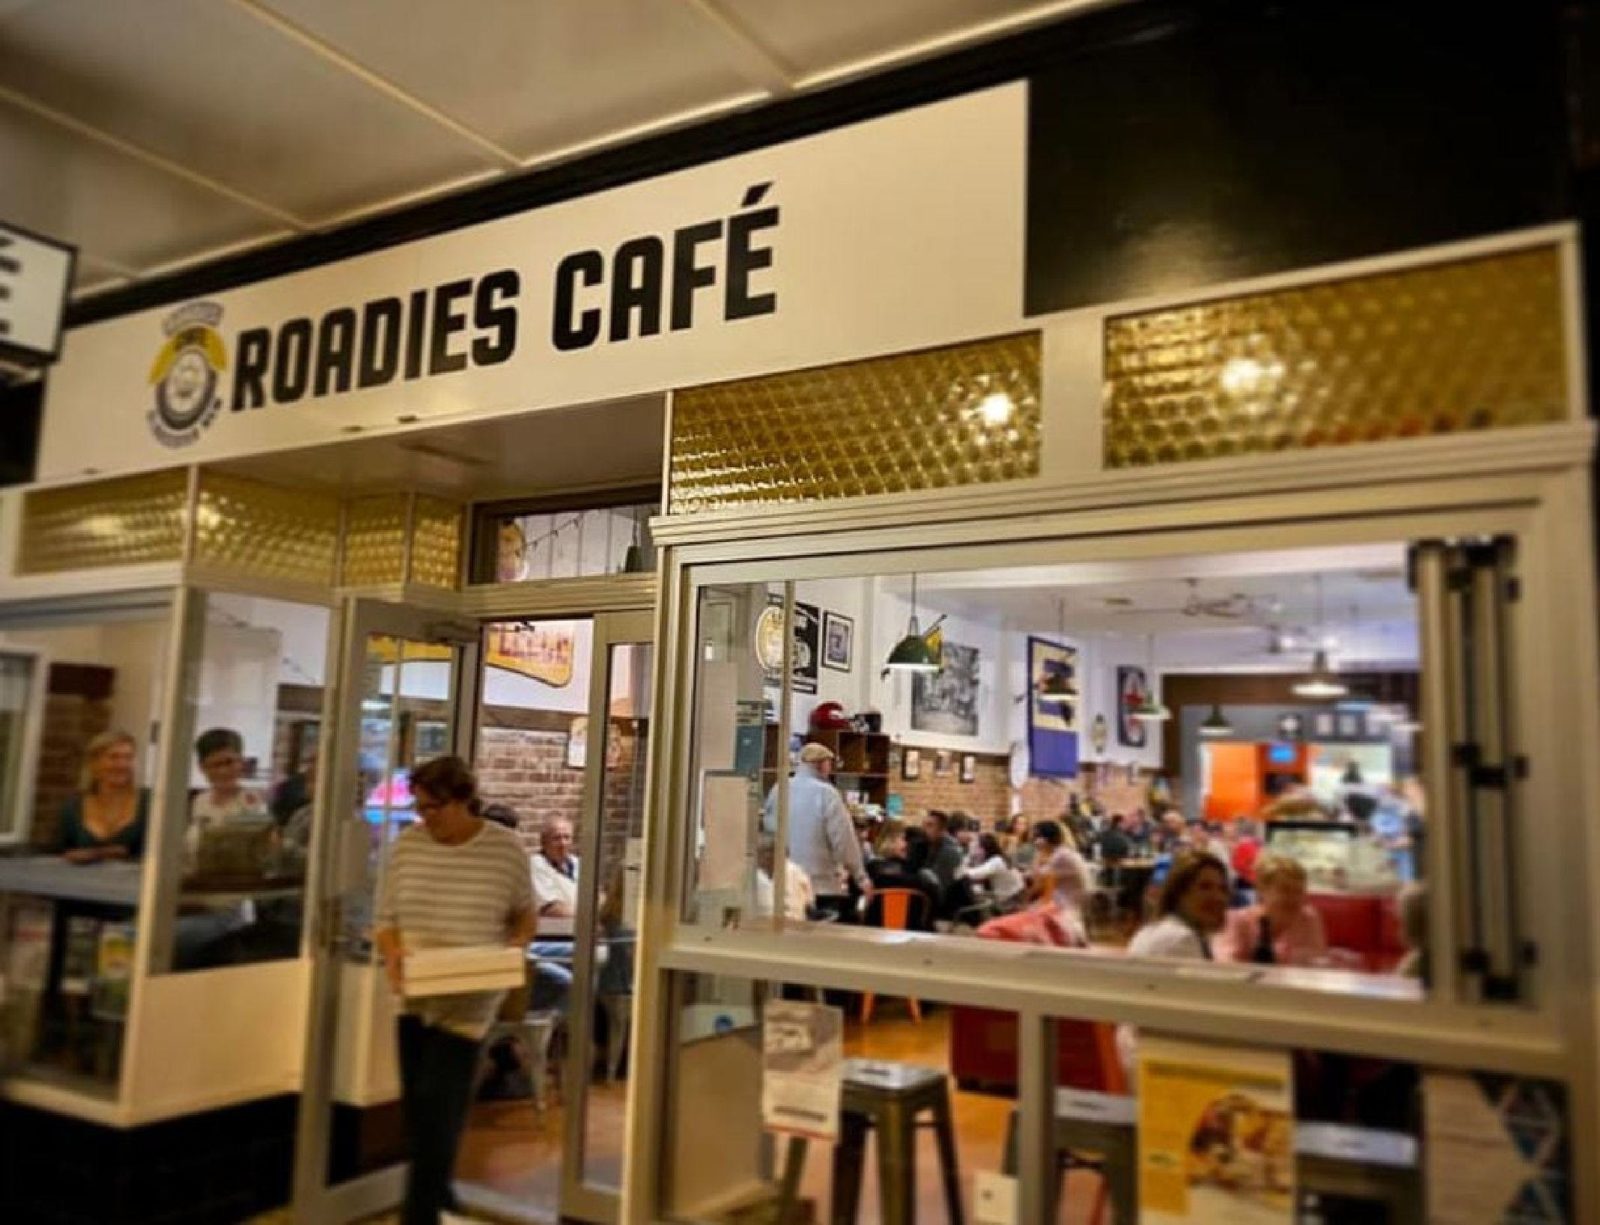 Rodies Cafe